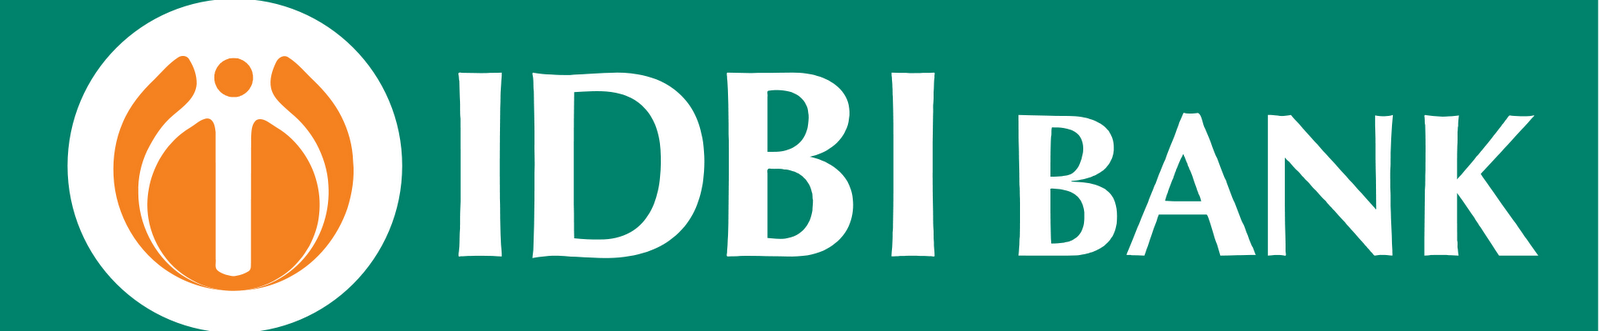 idbi bank logo at http://gkawaaz.blogspot.in